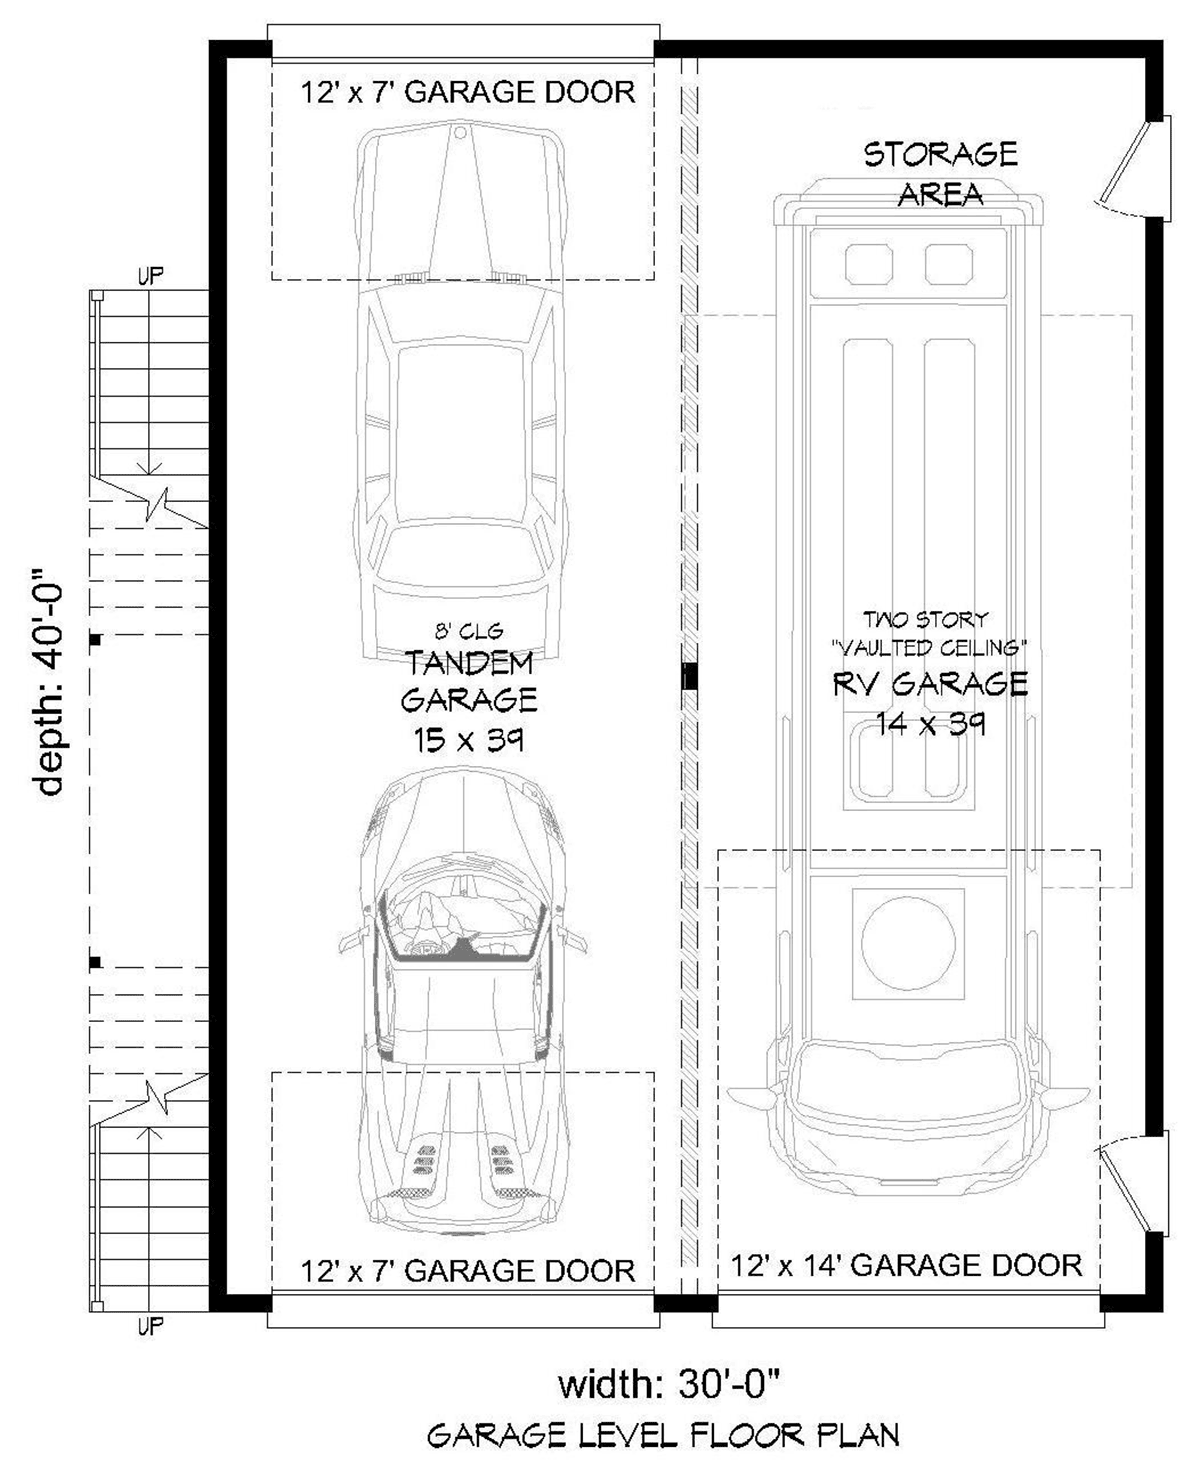 Contemporary, Modern Garage-Living Plan 40869, 2 Car Garage Level One